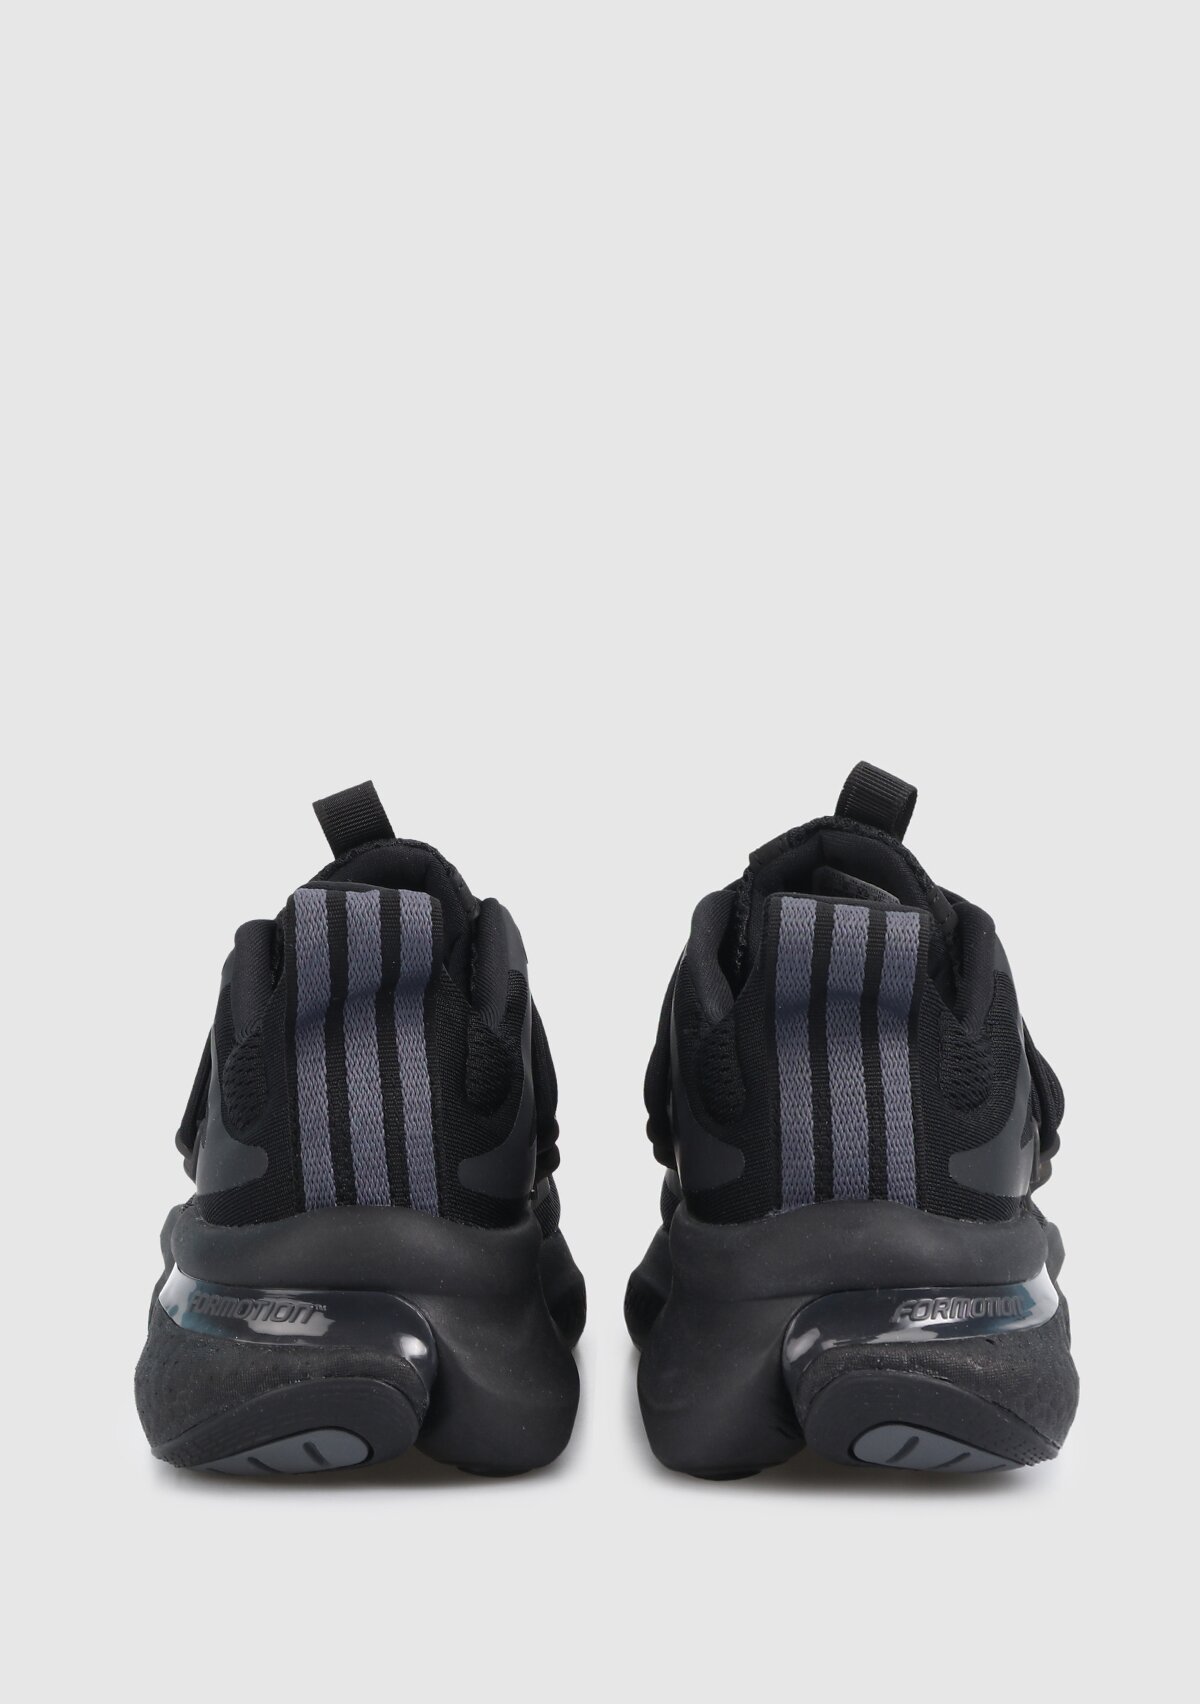 adidas Alphaboost V1 Siyah Erkek Koşu Ayakkabısı Hp2760